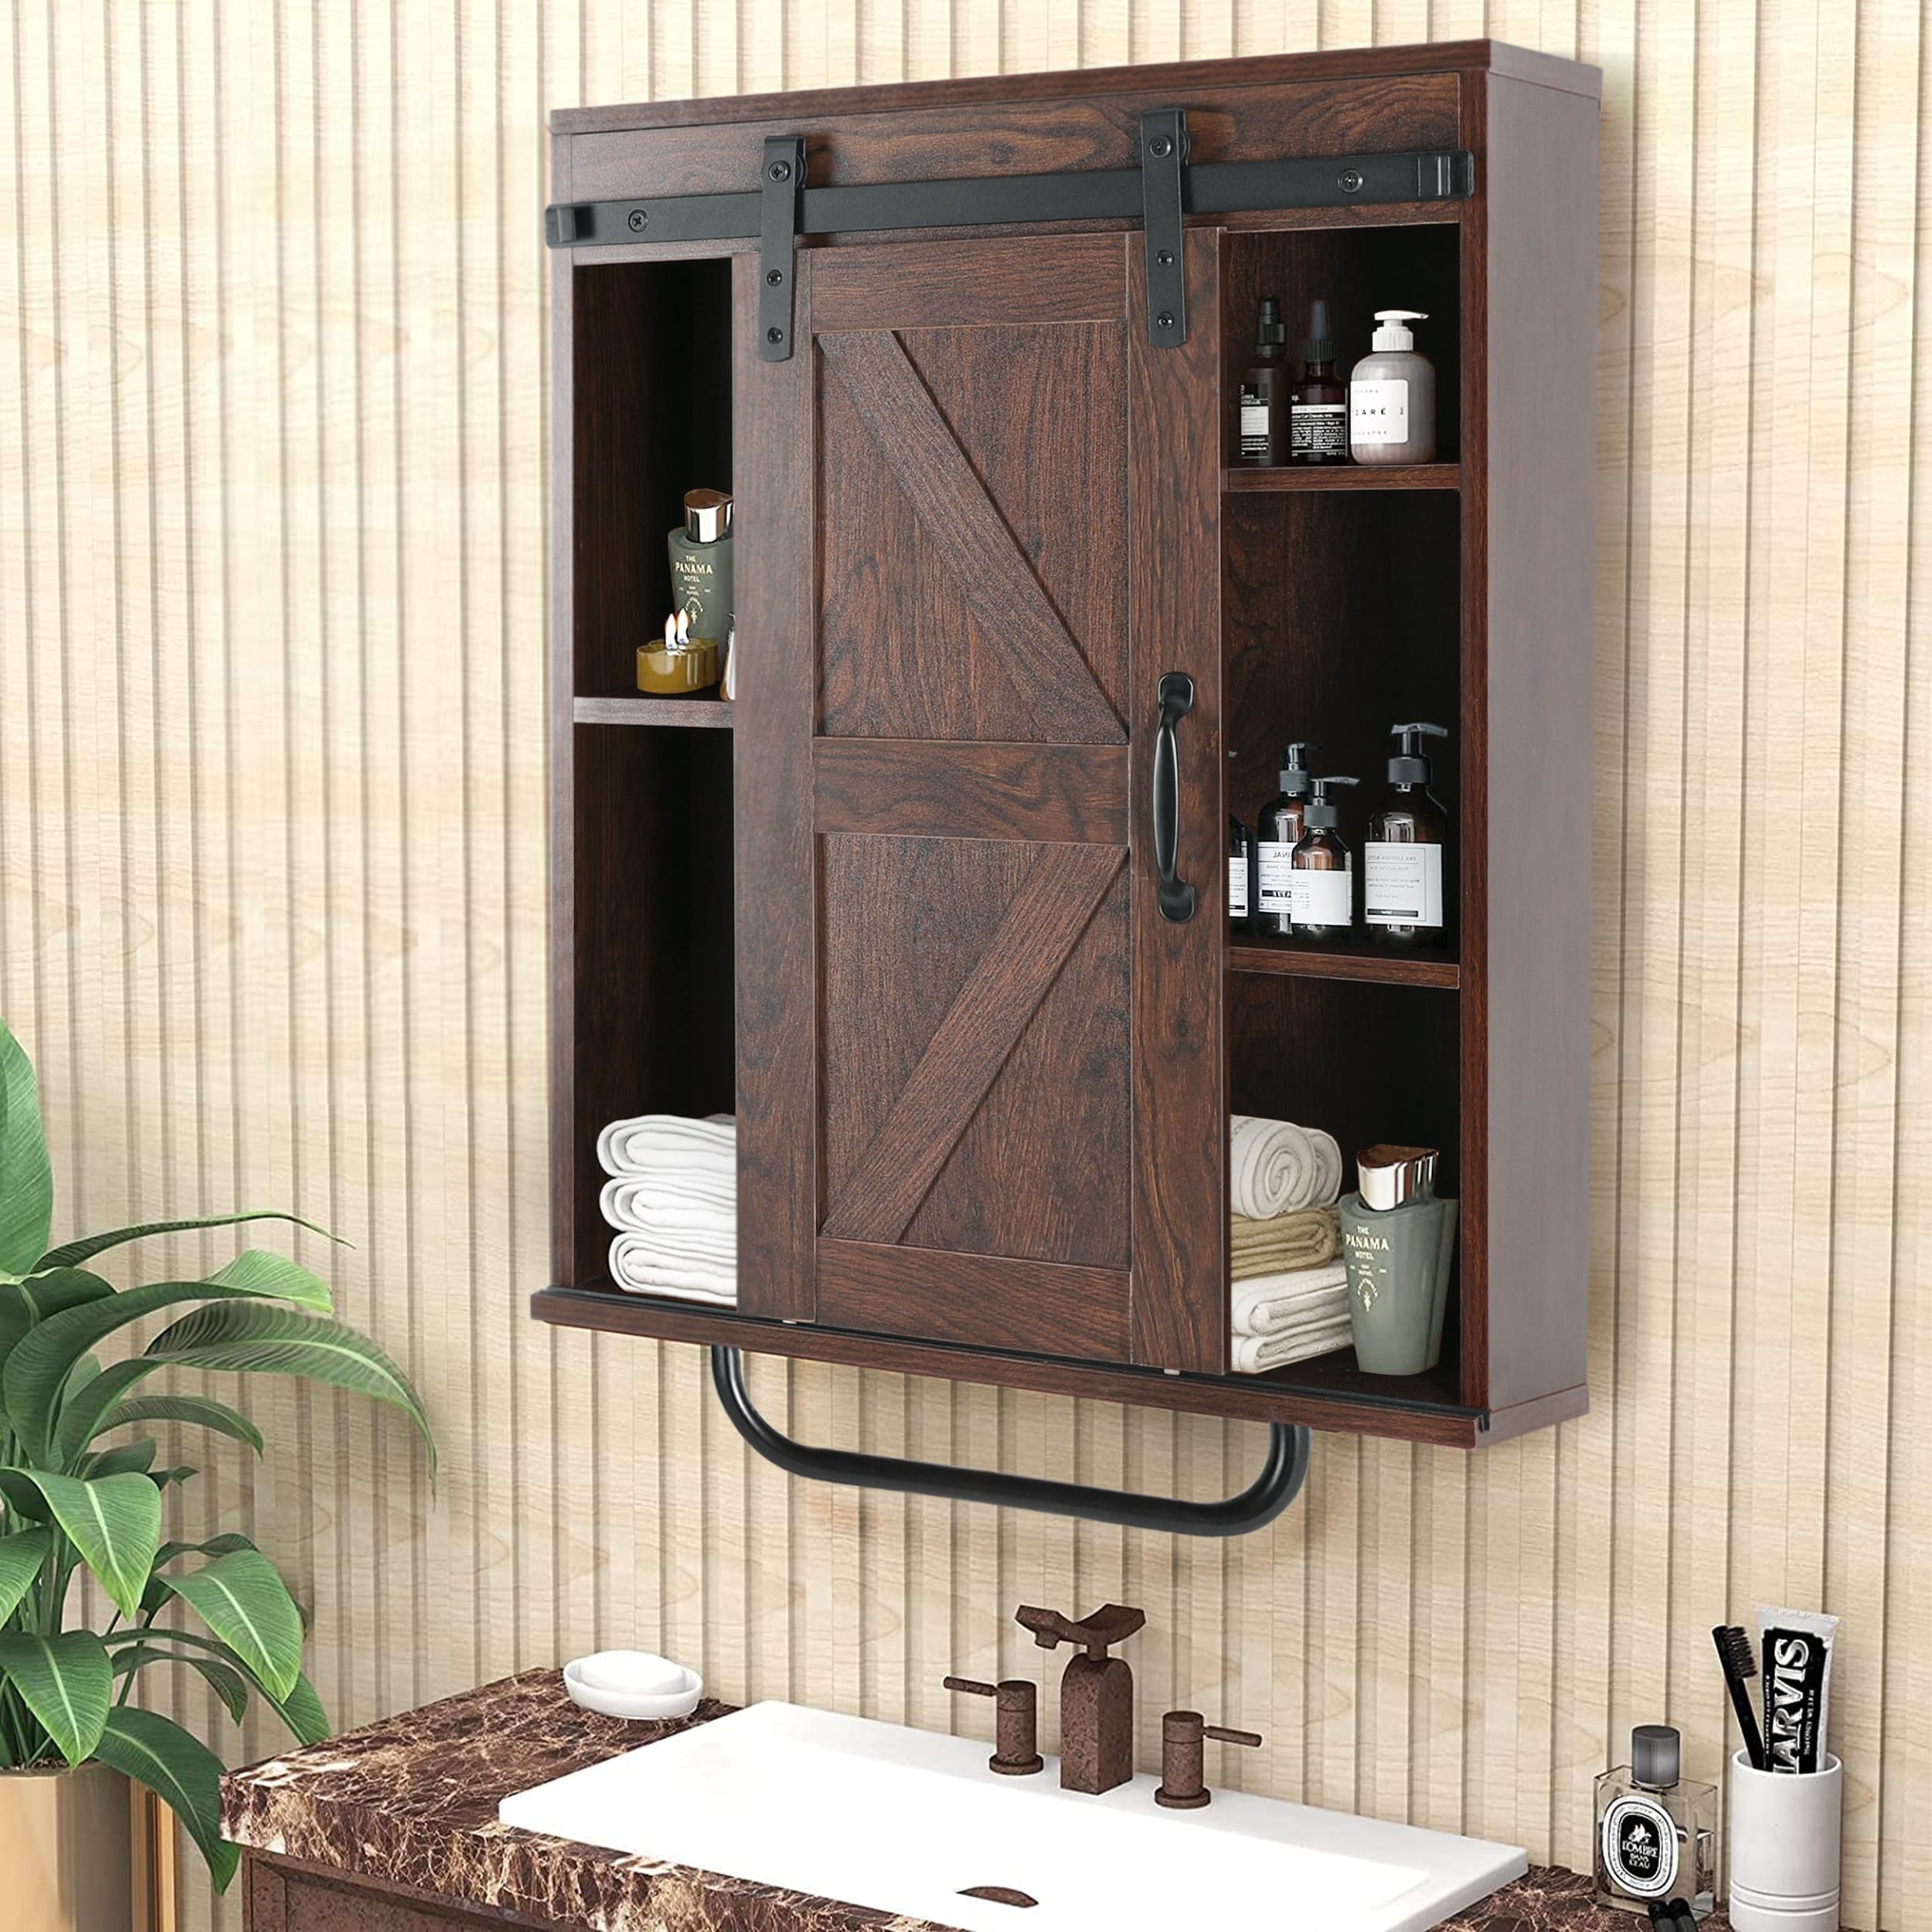 Veikous Oversized Bathroom Medicine Cabinet Wall Mounted Storage